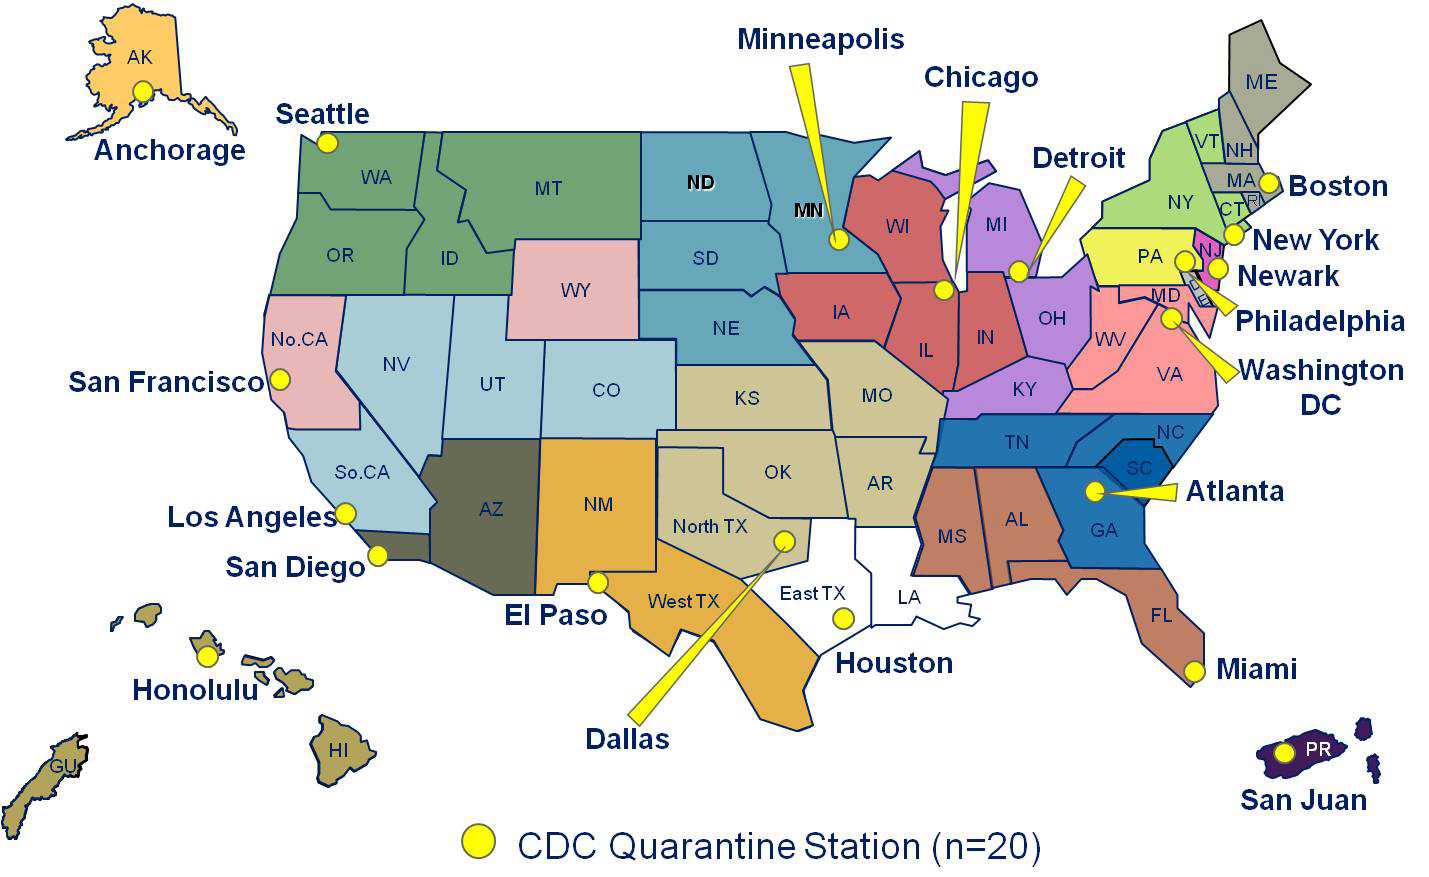 Map of United States showing the quarantine stations. Stations are in the following cities: Anchorage, Seattle, San Francisco, Los Angeles, San Diego, Honolulu, El Paso, Dallas, Houston, Miami, San Juan, Atlanta, Minneapolis, Chicago, Detroit, Boston, New York, Newark, Philadelphi, Washington DC